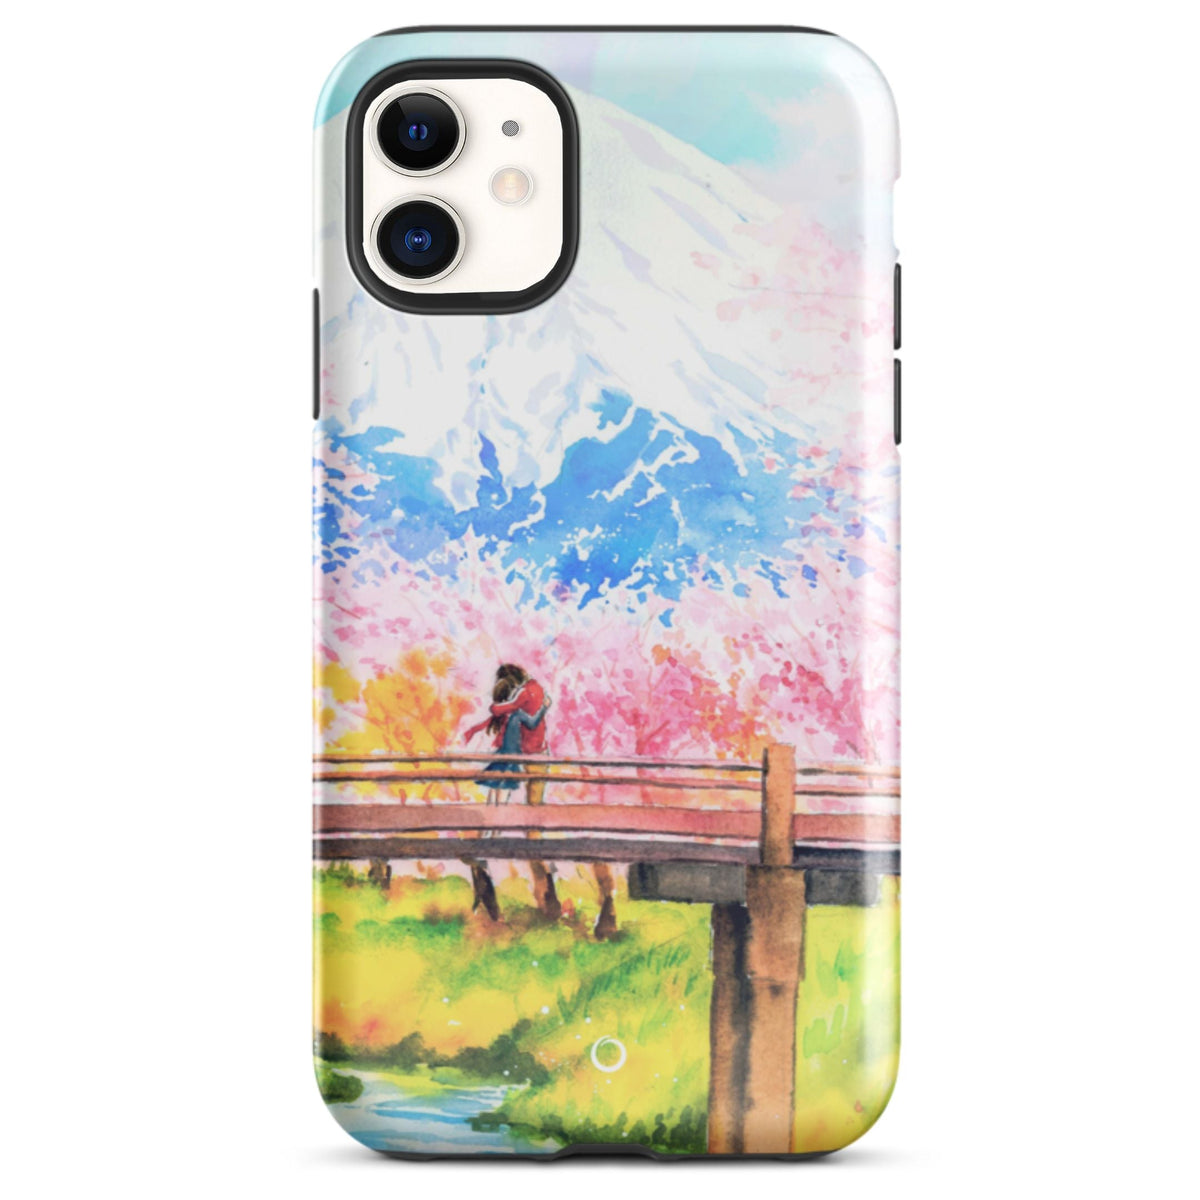 Sakura Dreamscape iPhone Case - iPhone 12 mini